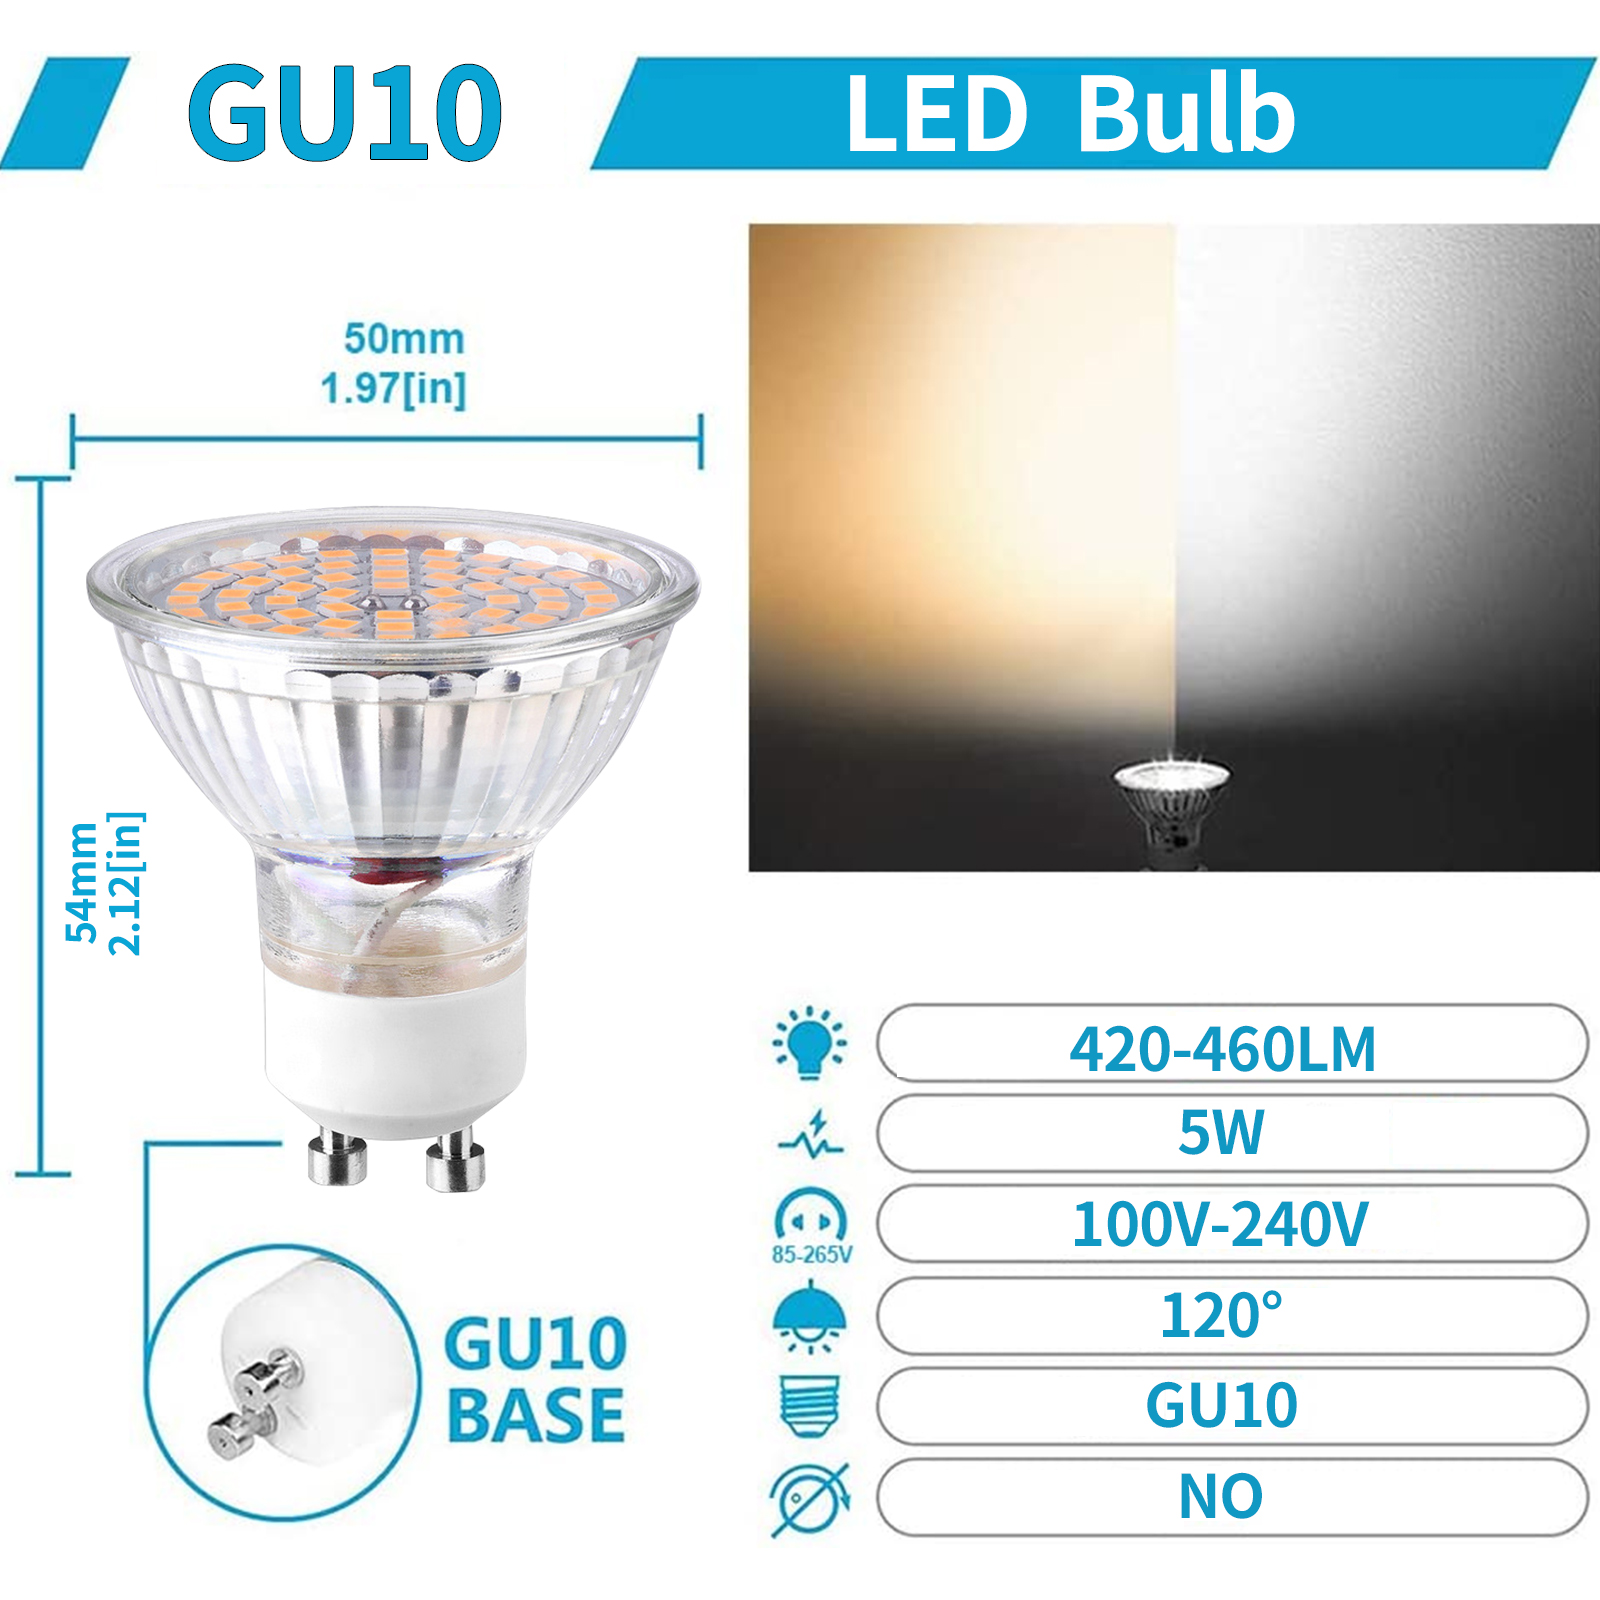 5W LED GU10 MR16 Bulb